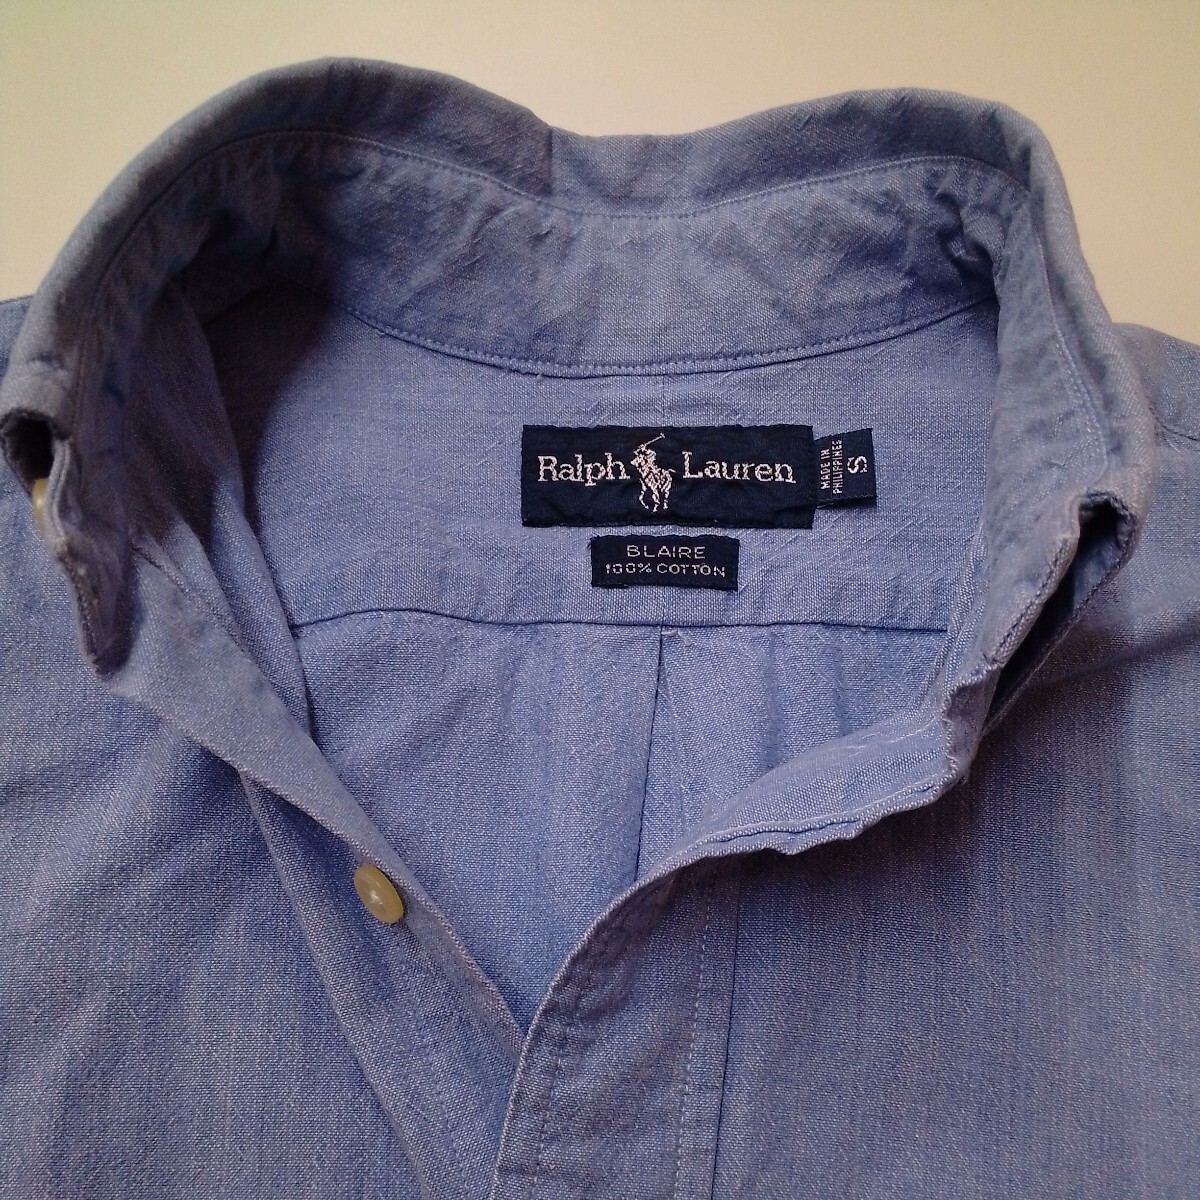 Ralph Lauren Ralph Lauren рубашка с коротким рукавом хлопок б/у одежда мужской S размер свободно .[ б/у ]